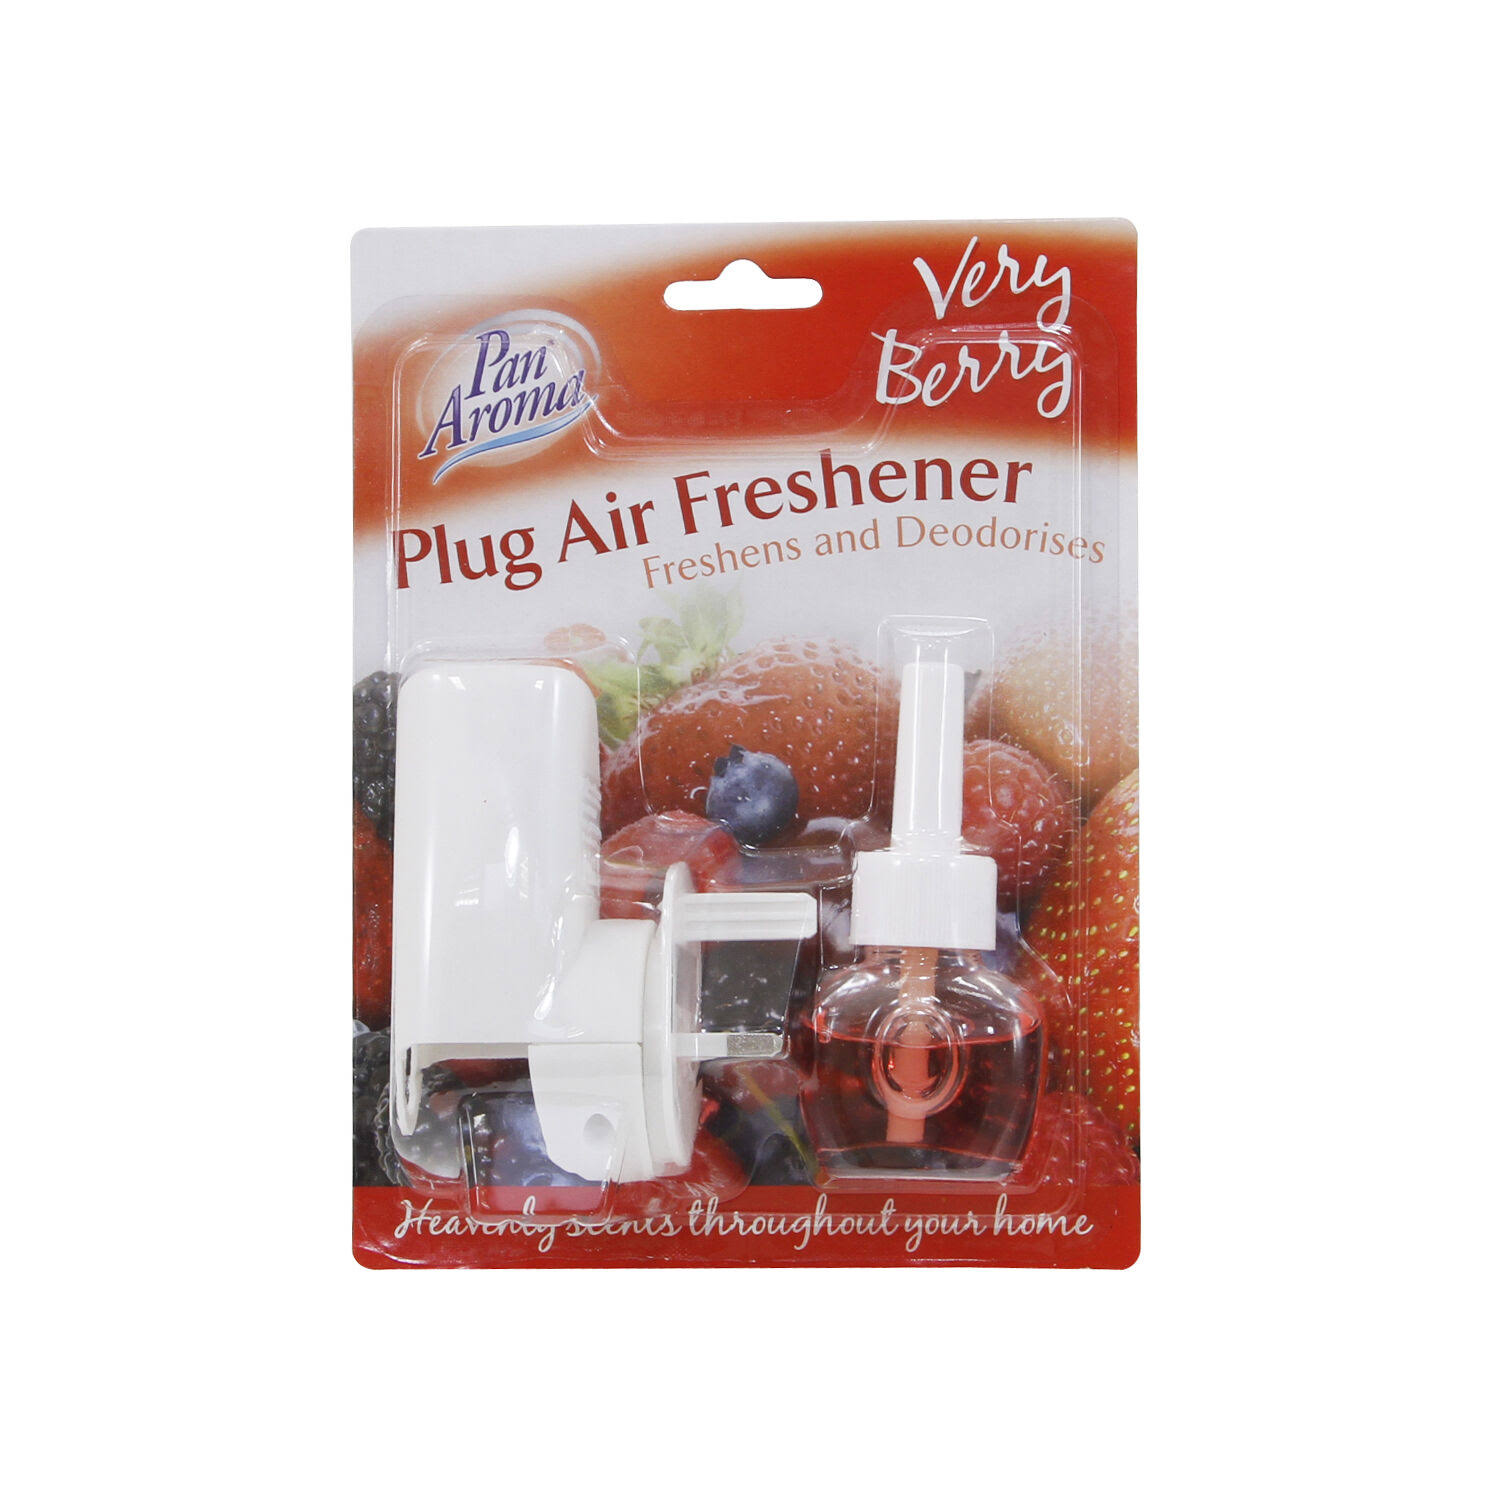 Pan Aroma Plug Air Freshener - Very Berry, 20ml